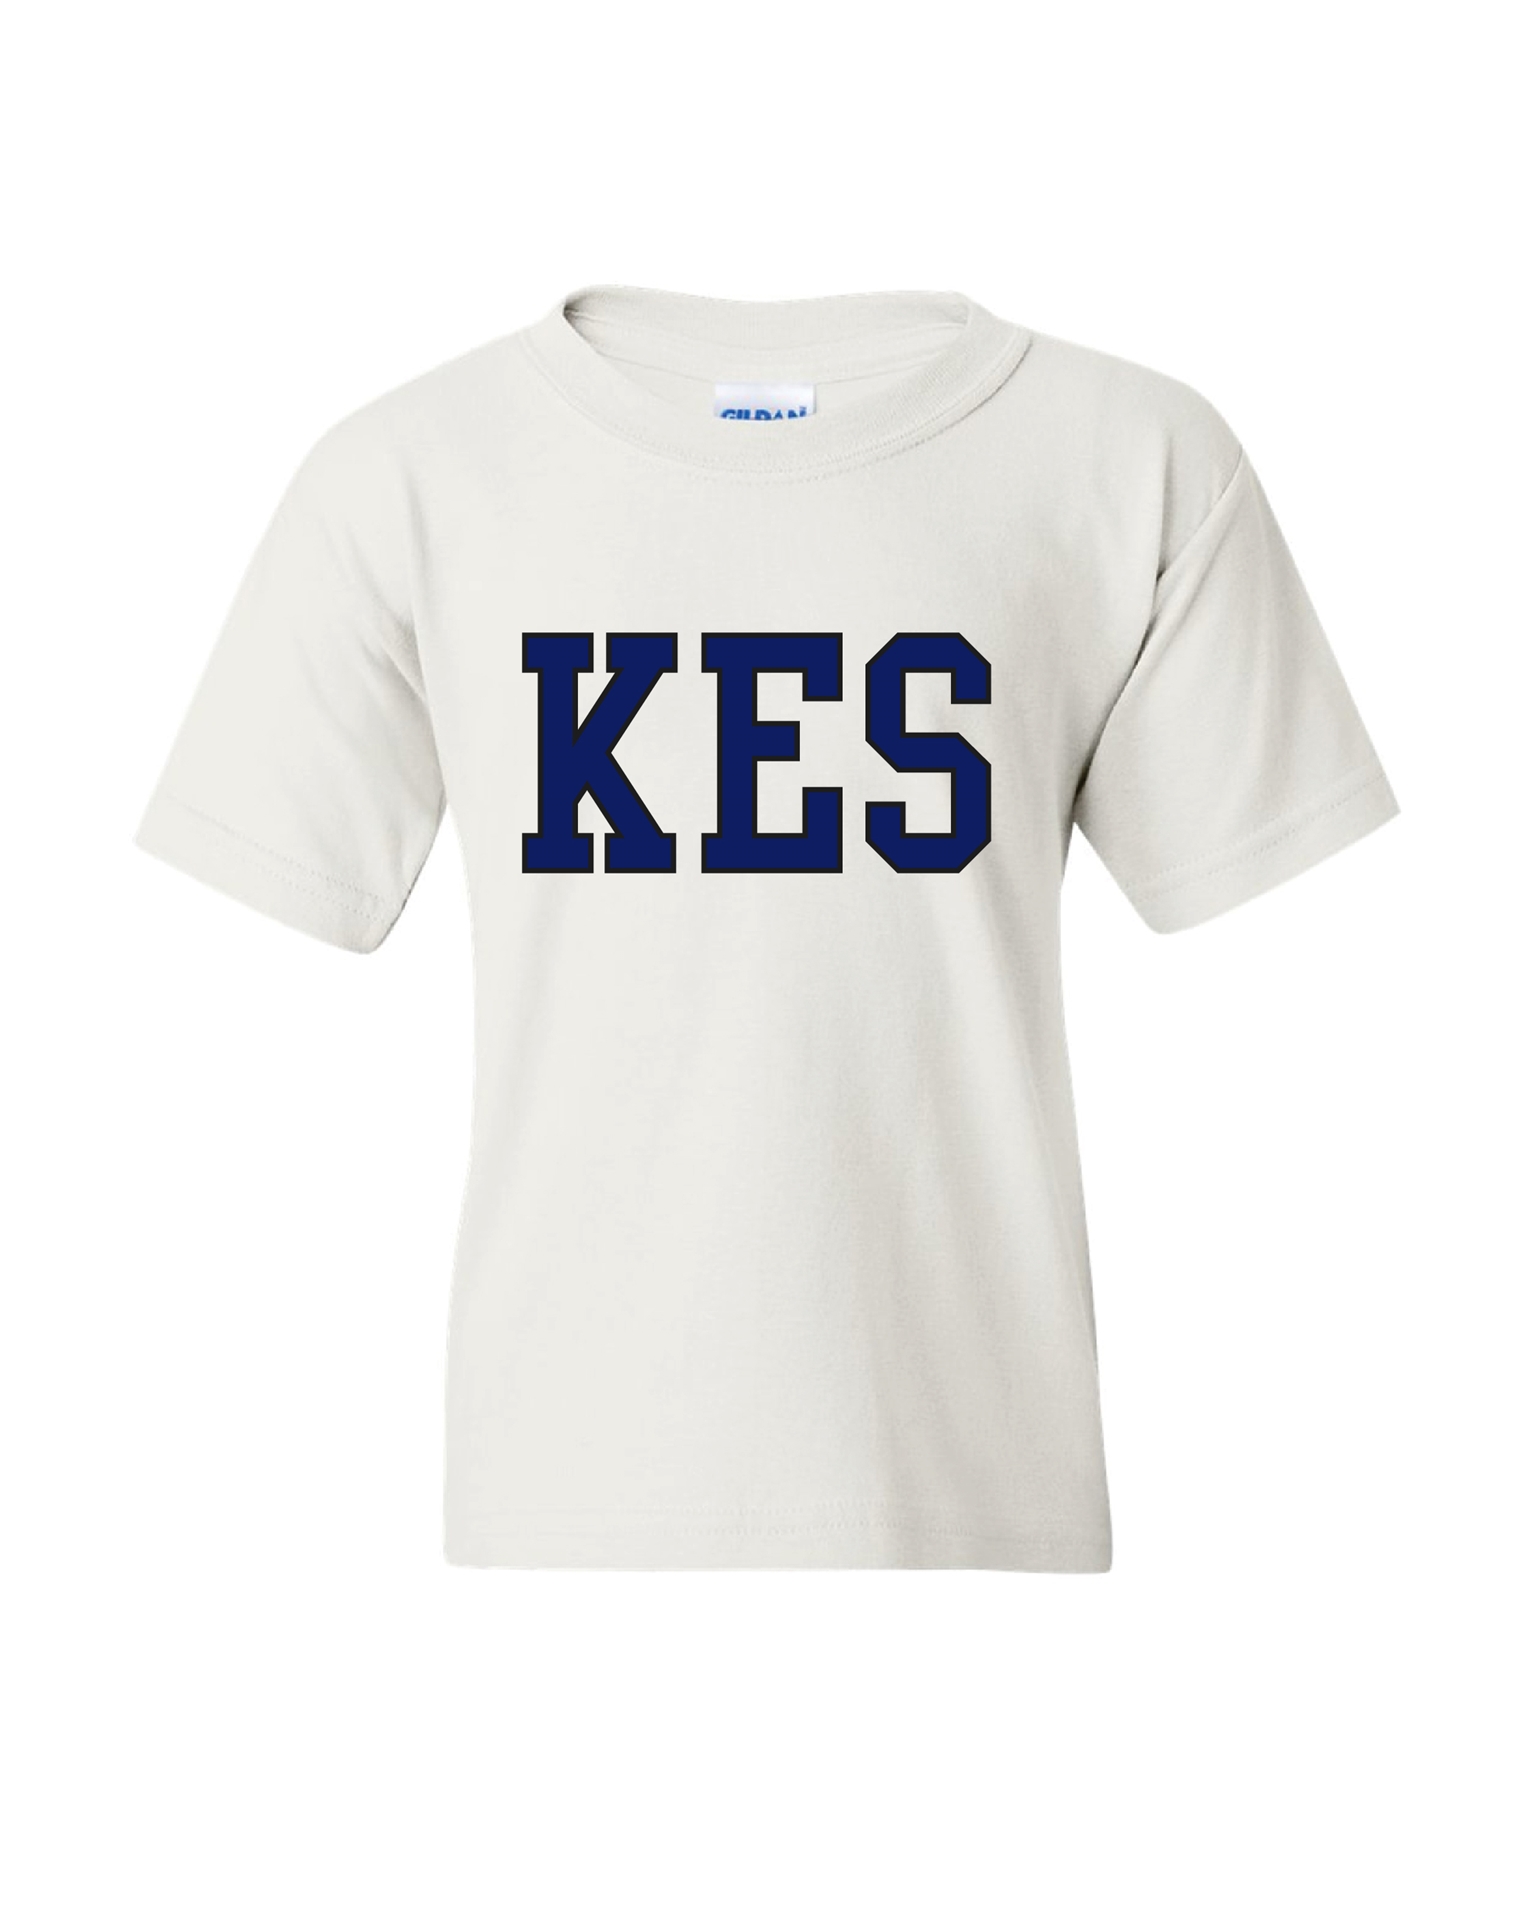 Kings-Edgehill School. KES White Youth T-Shirt